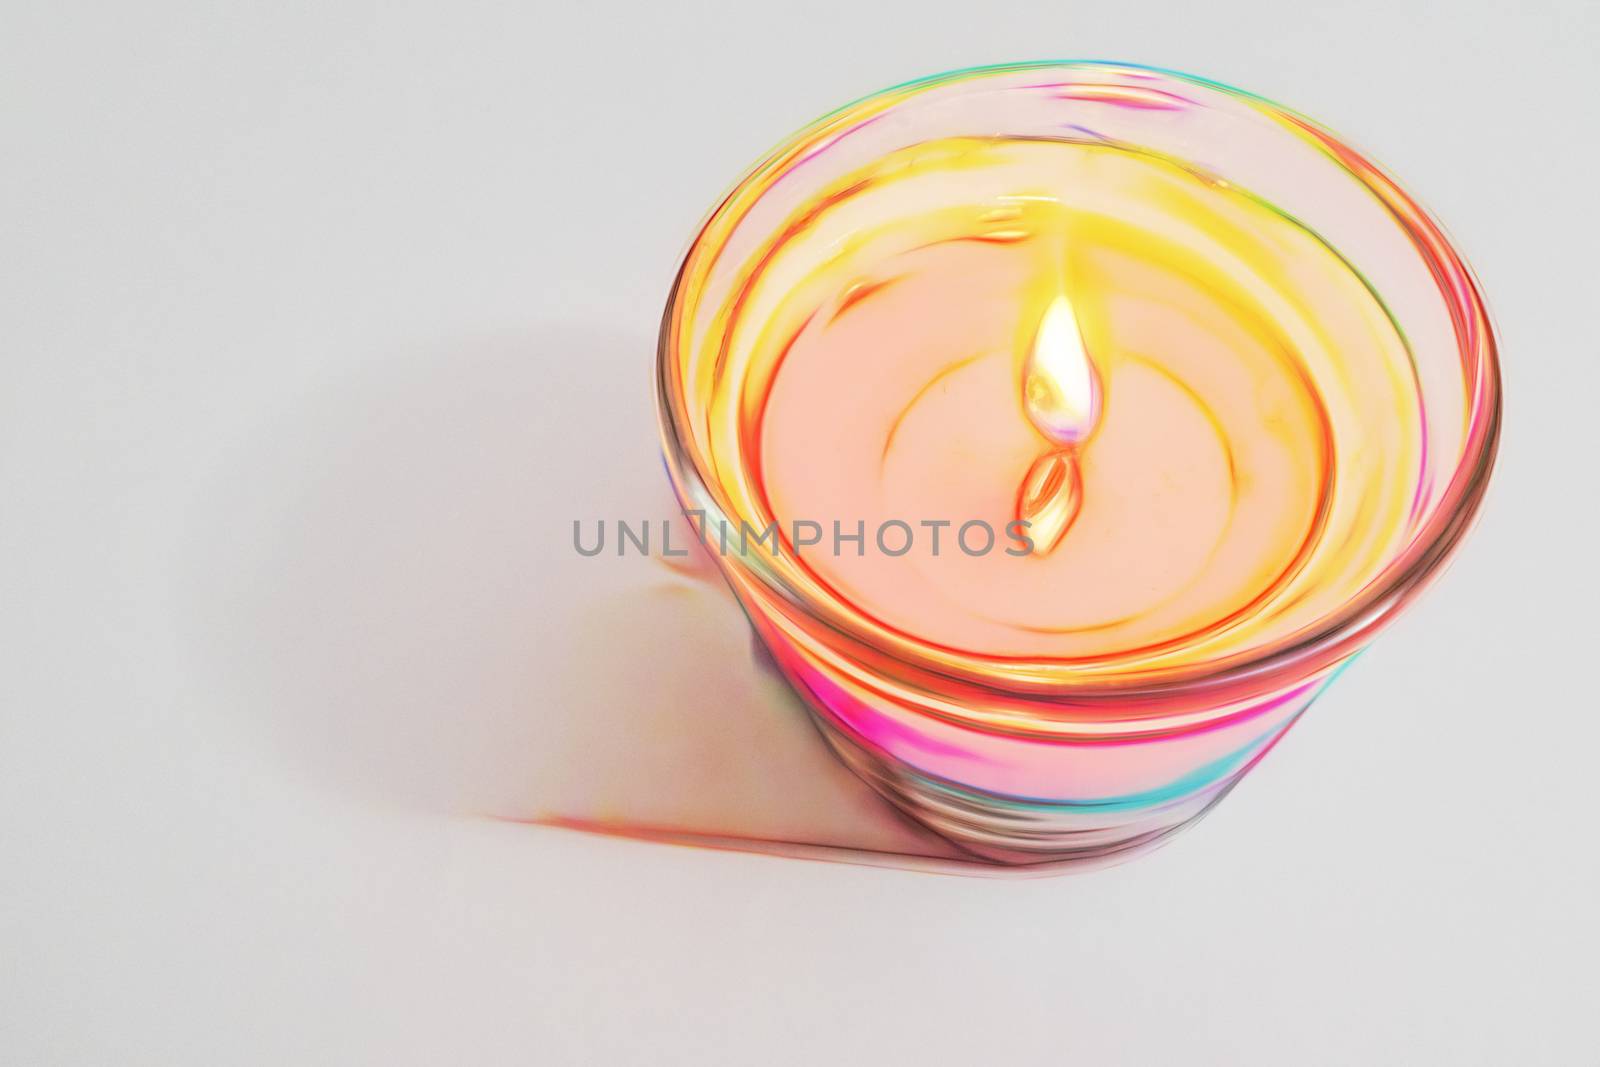 burning candle on a white background